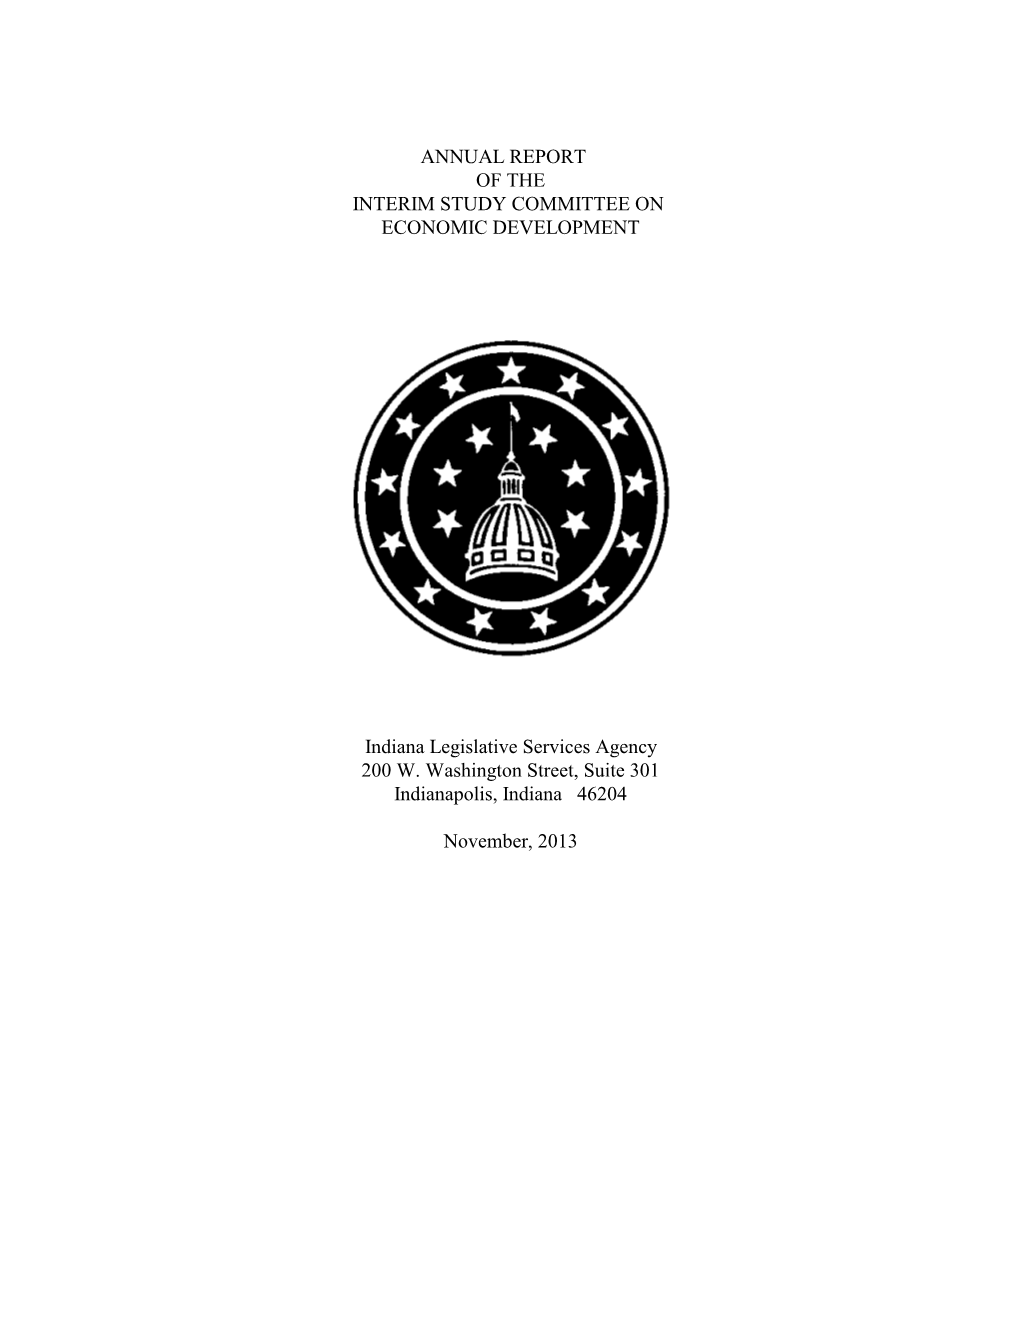 Annual Report of the Interim Study Committee on Economic Development